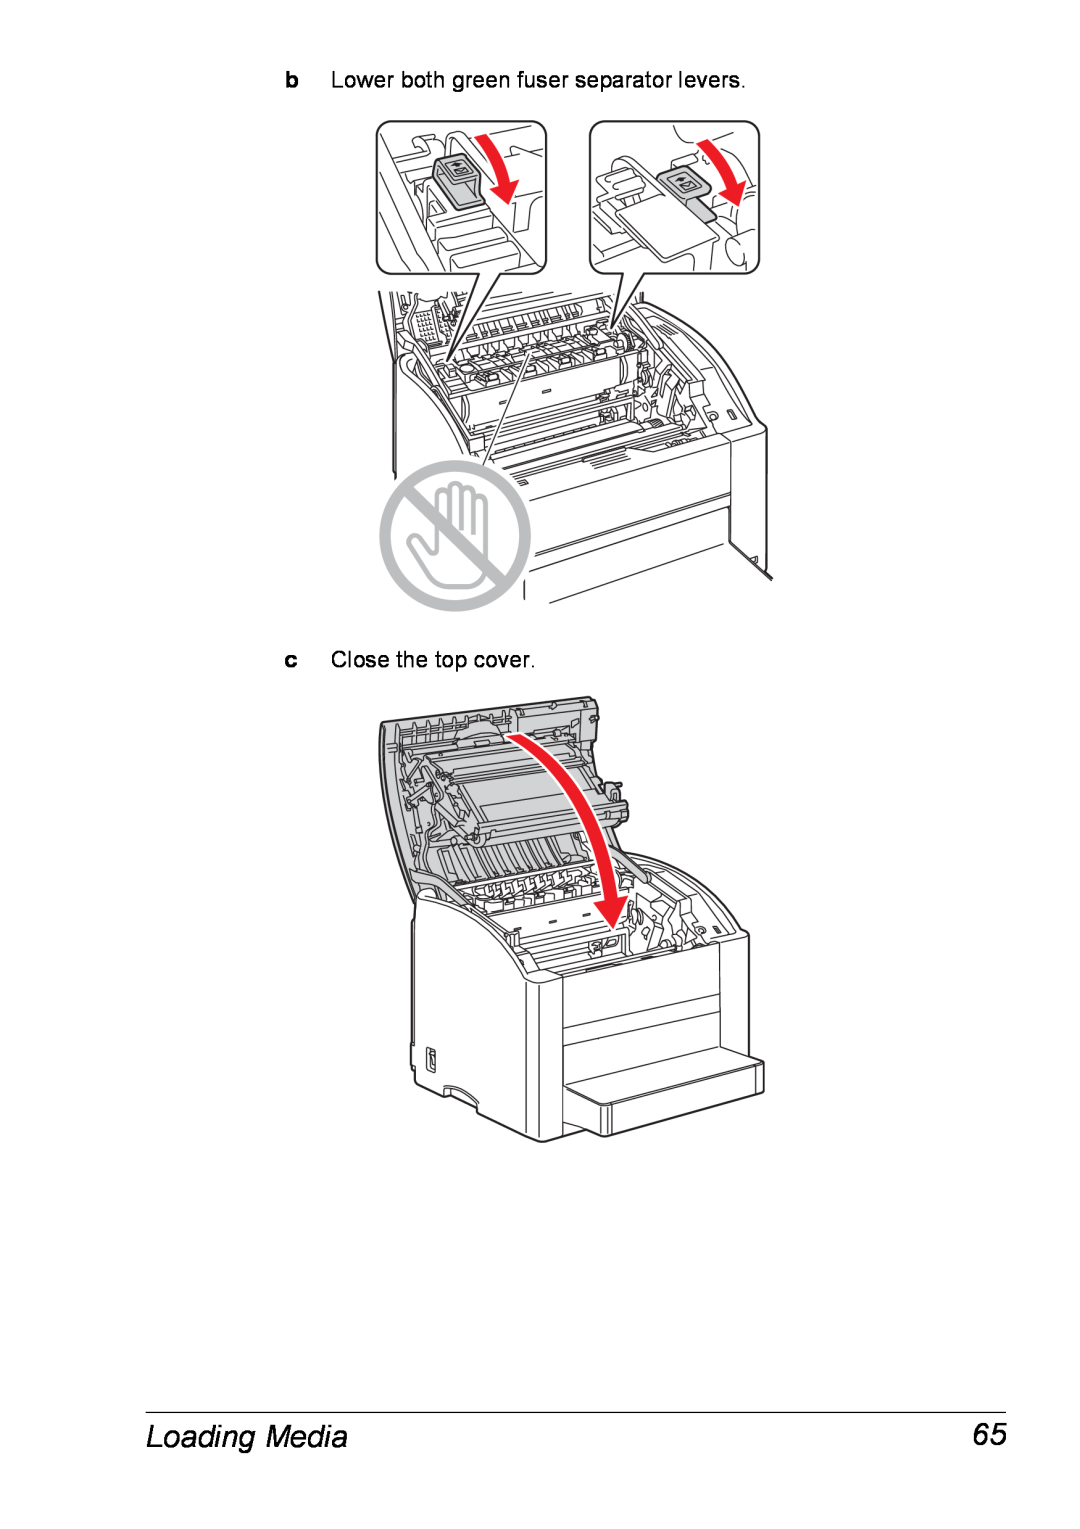 Xerox 6120 manual Loading Media, b Lower both green fuser separator levers c Close the top cover 